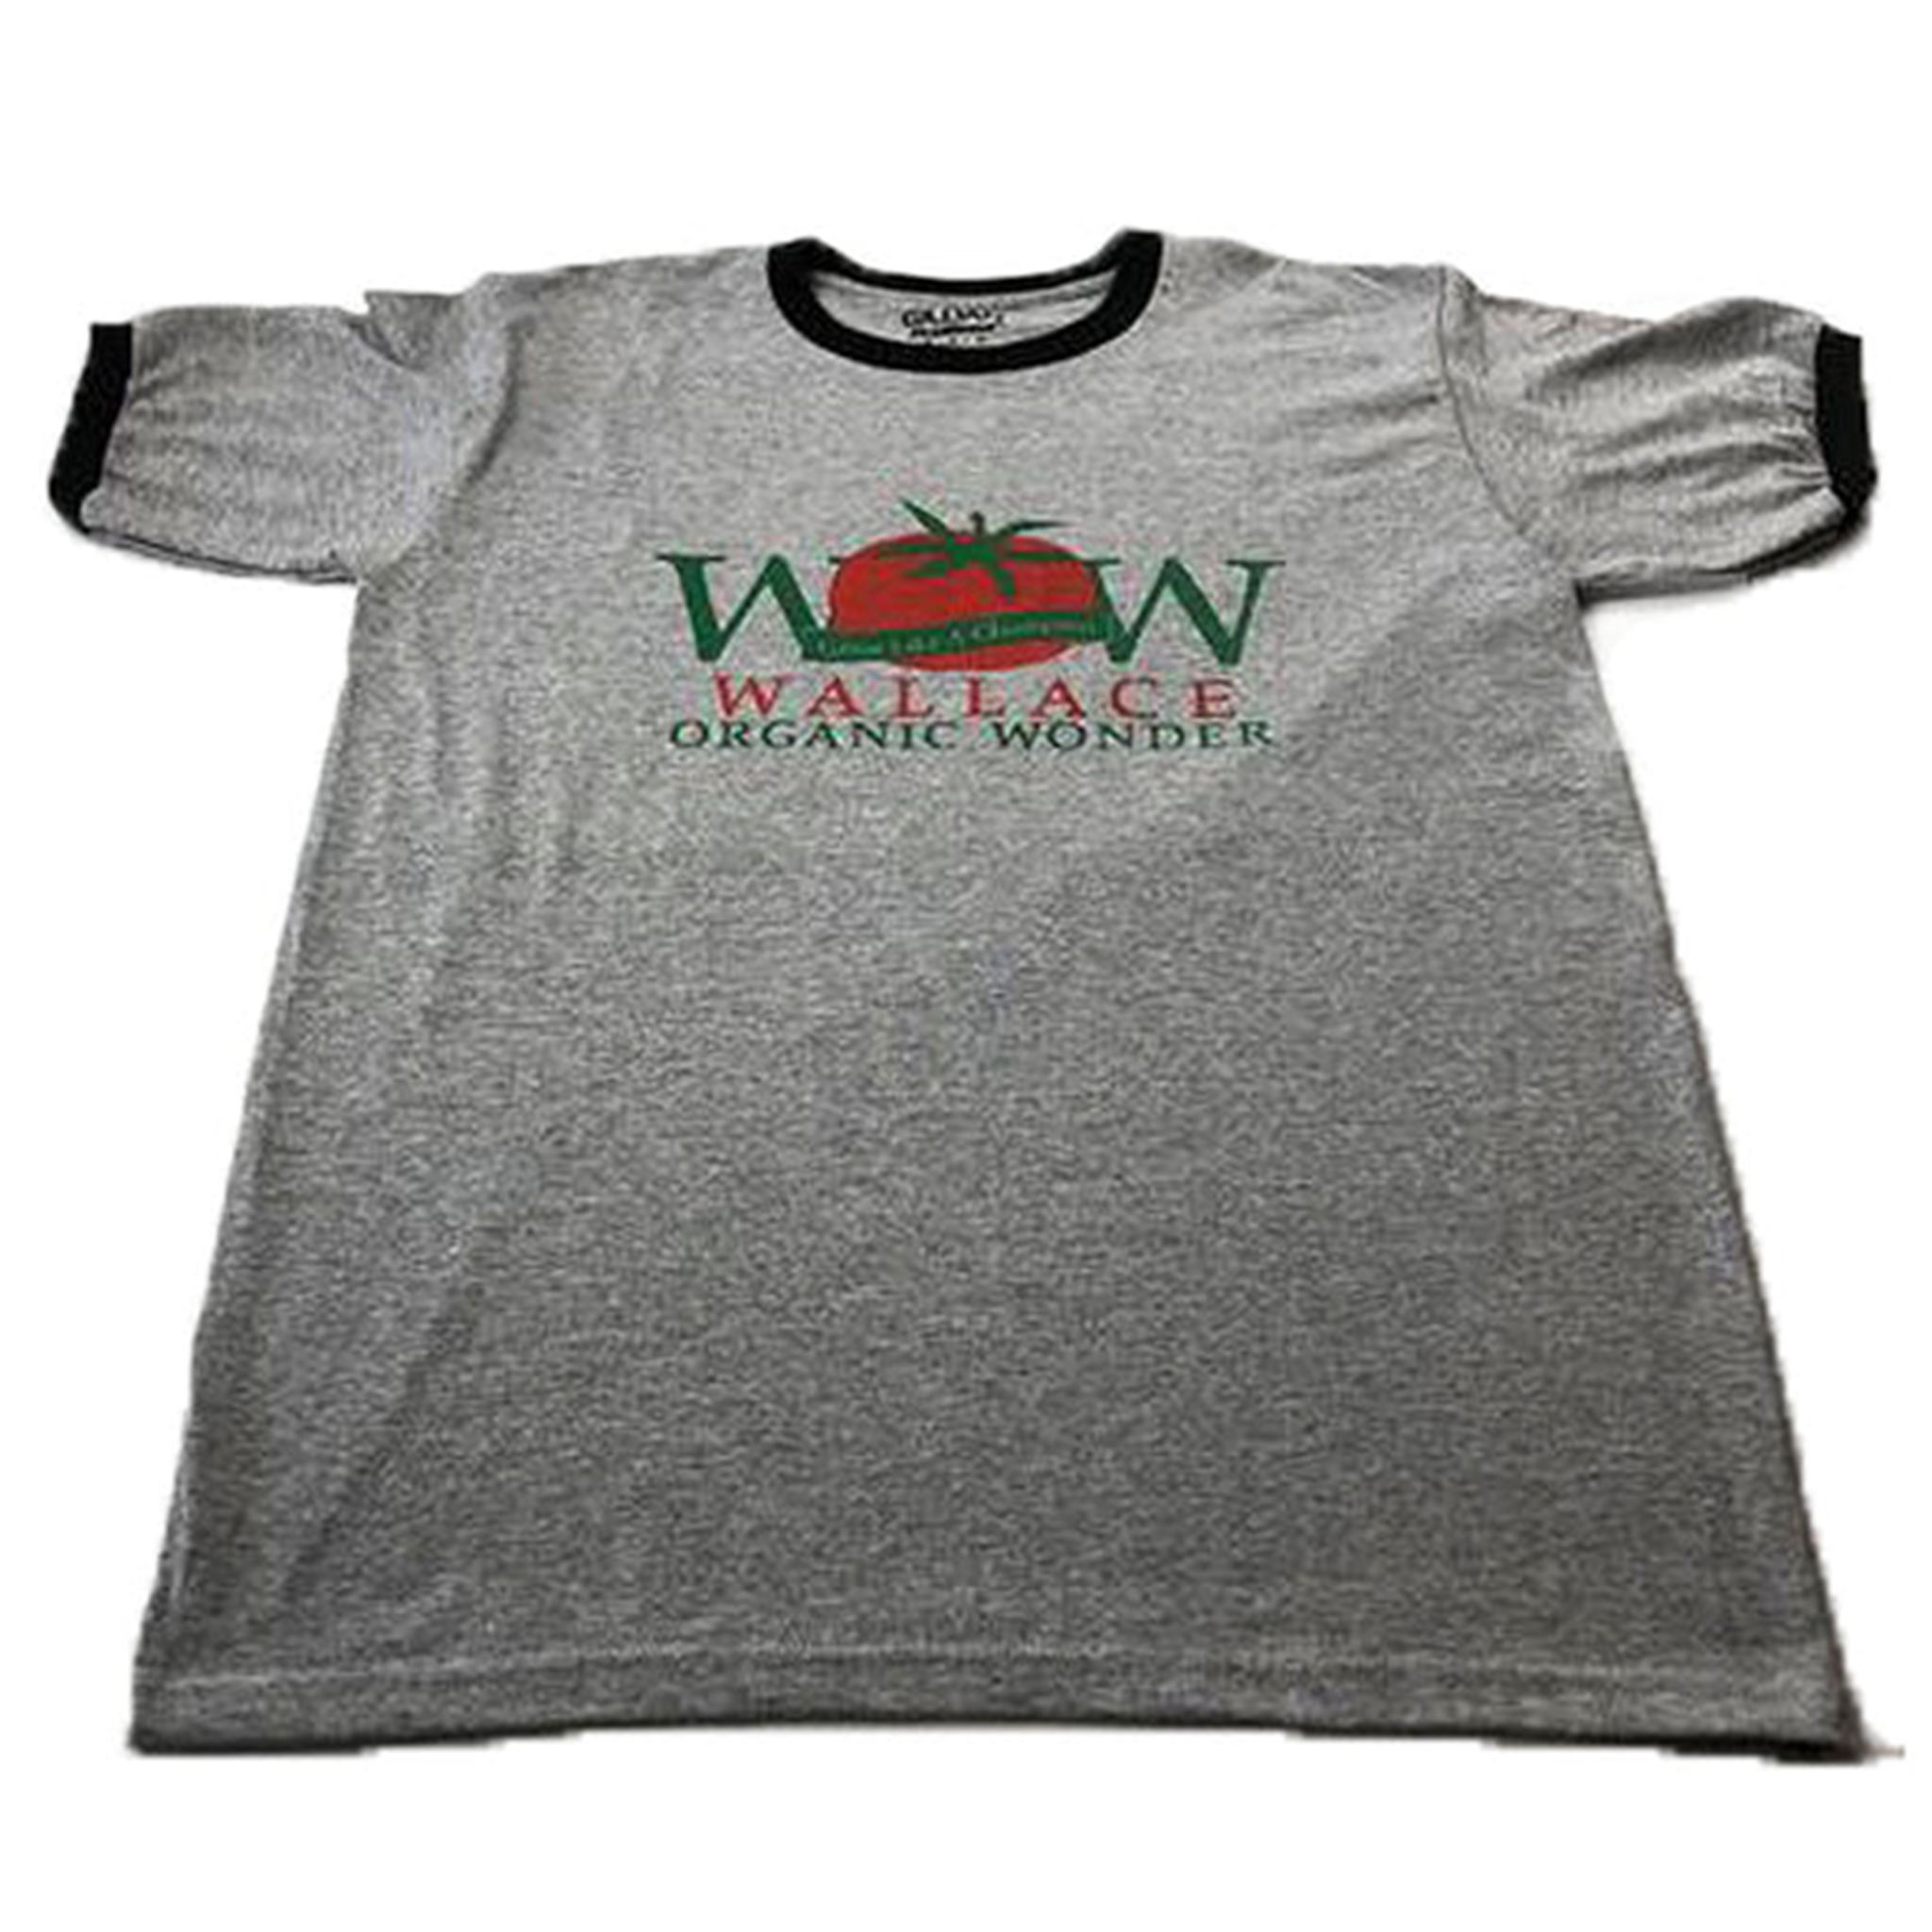 Vintage Distressed Look T- Shirt Wallace Organic Wonder